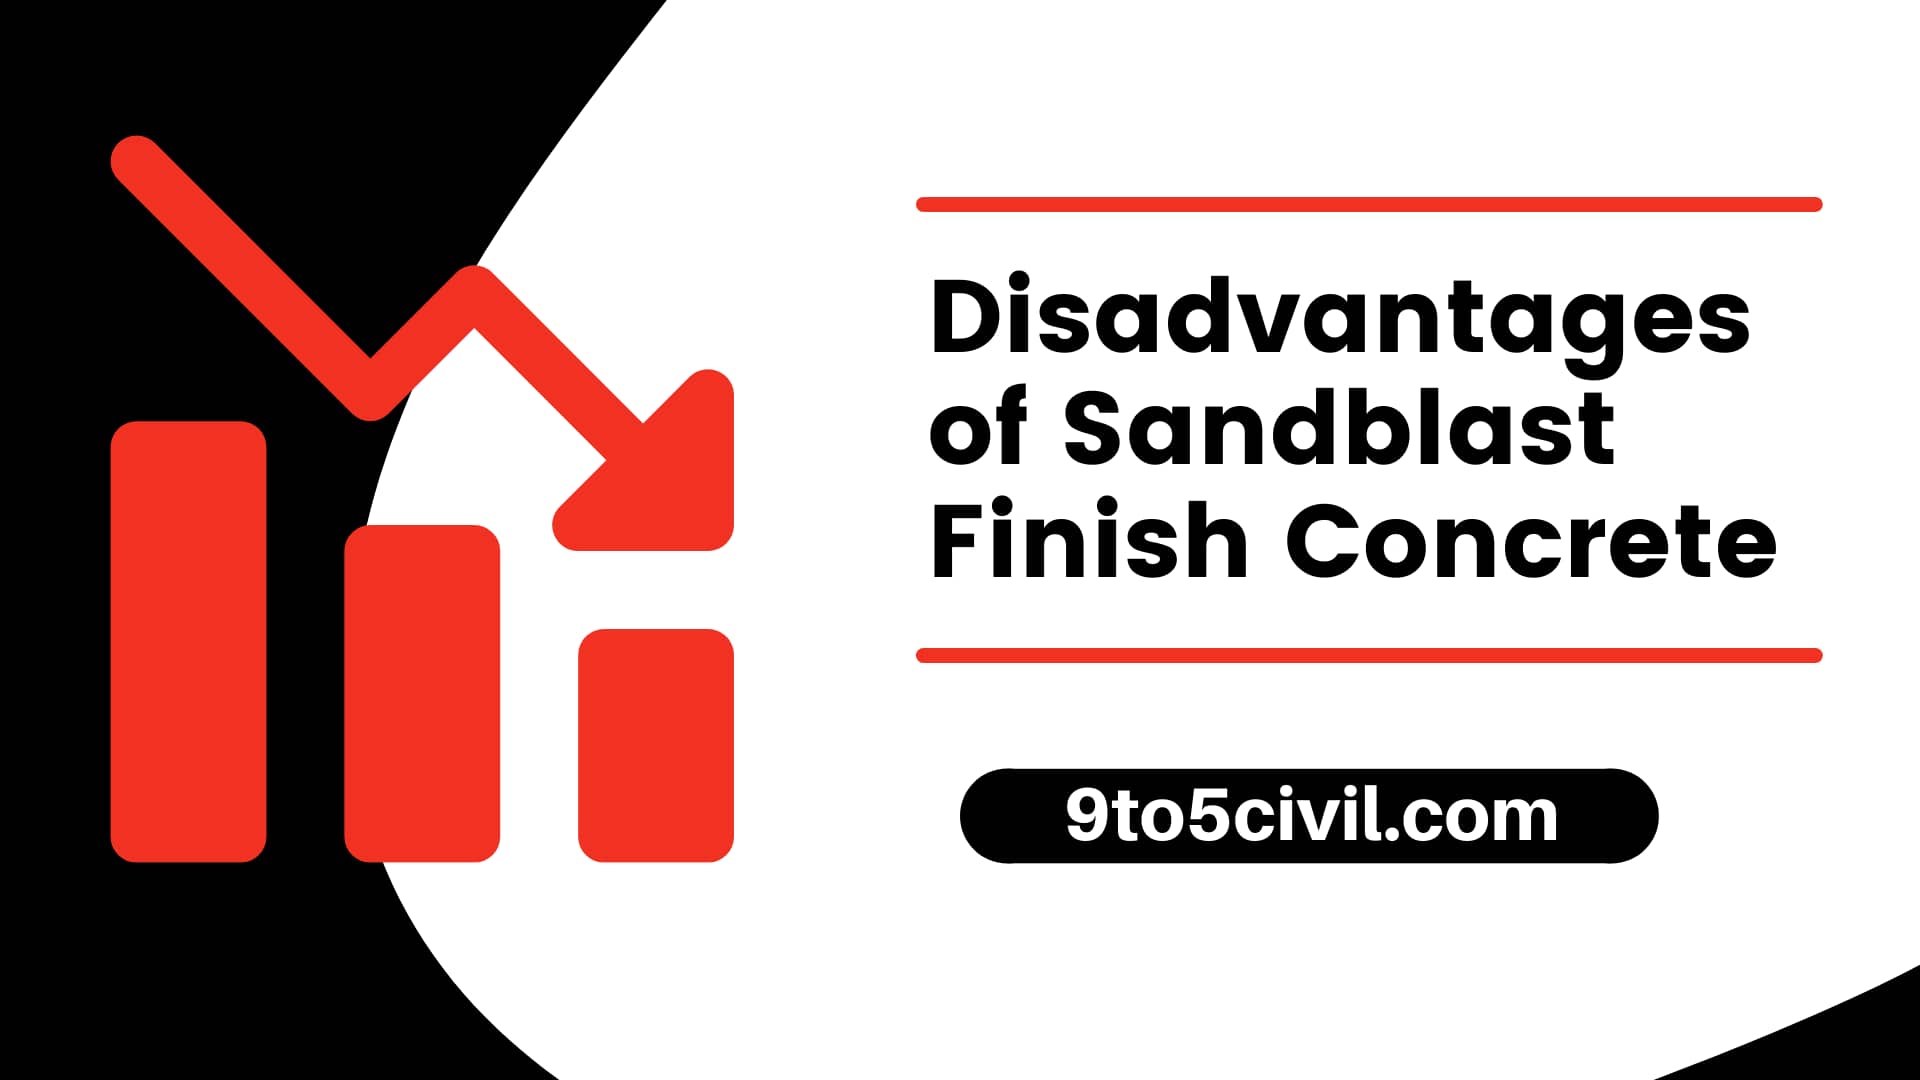 Disadvantages of Sandblast Finish Concrete